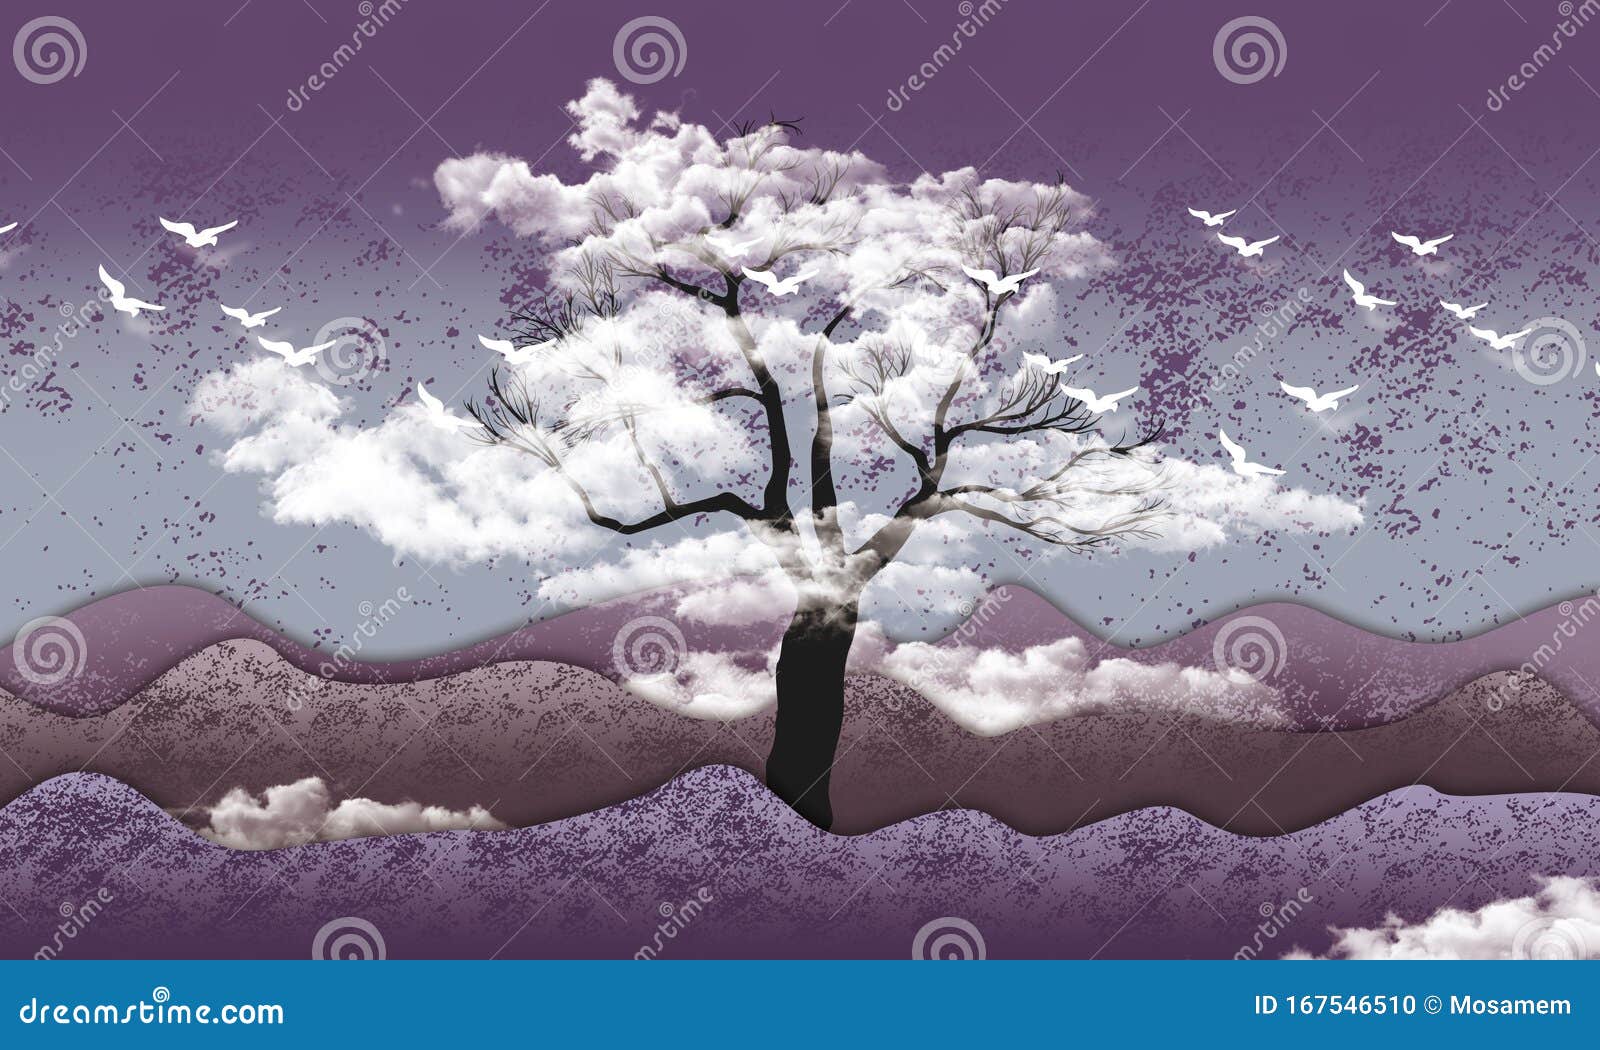 3d Mural Wallpaper 山 天上白鸟 云中黑树淡紫色背景库存例证 插画包括有设计 森林